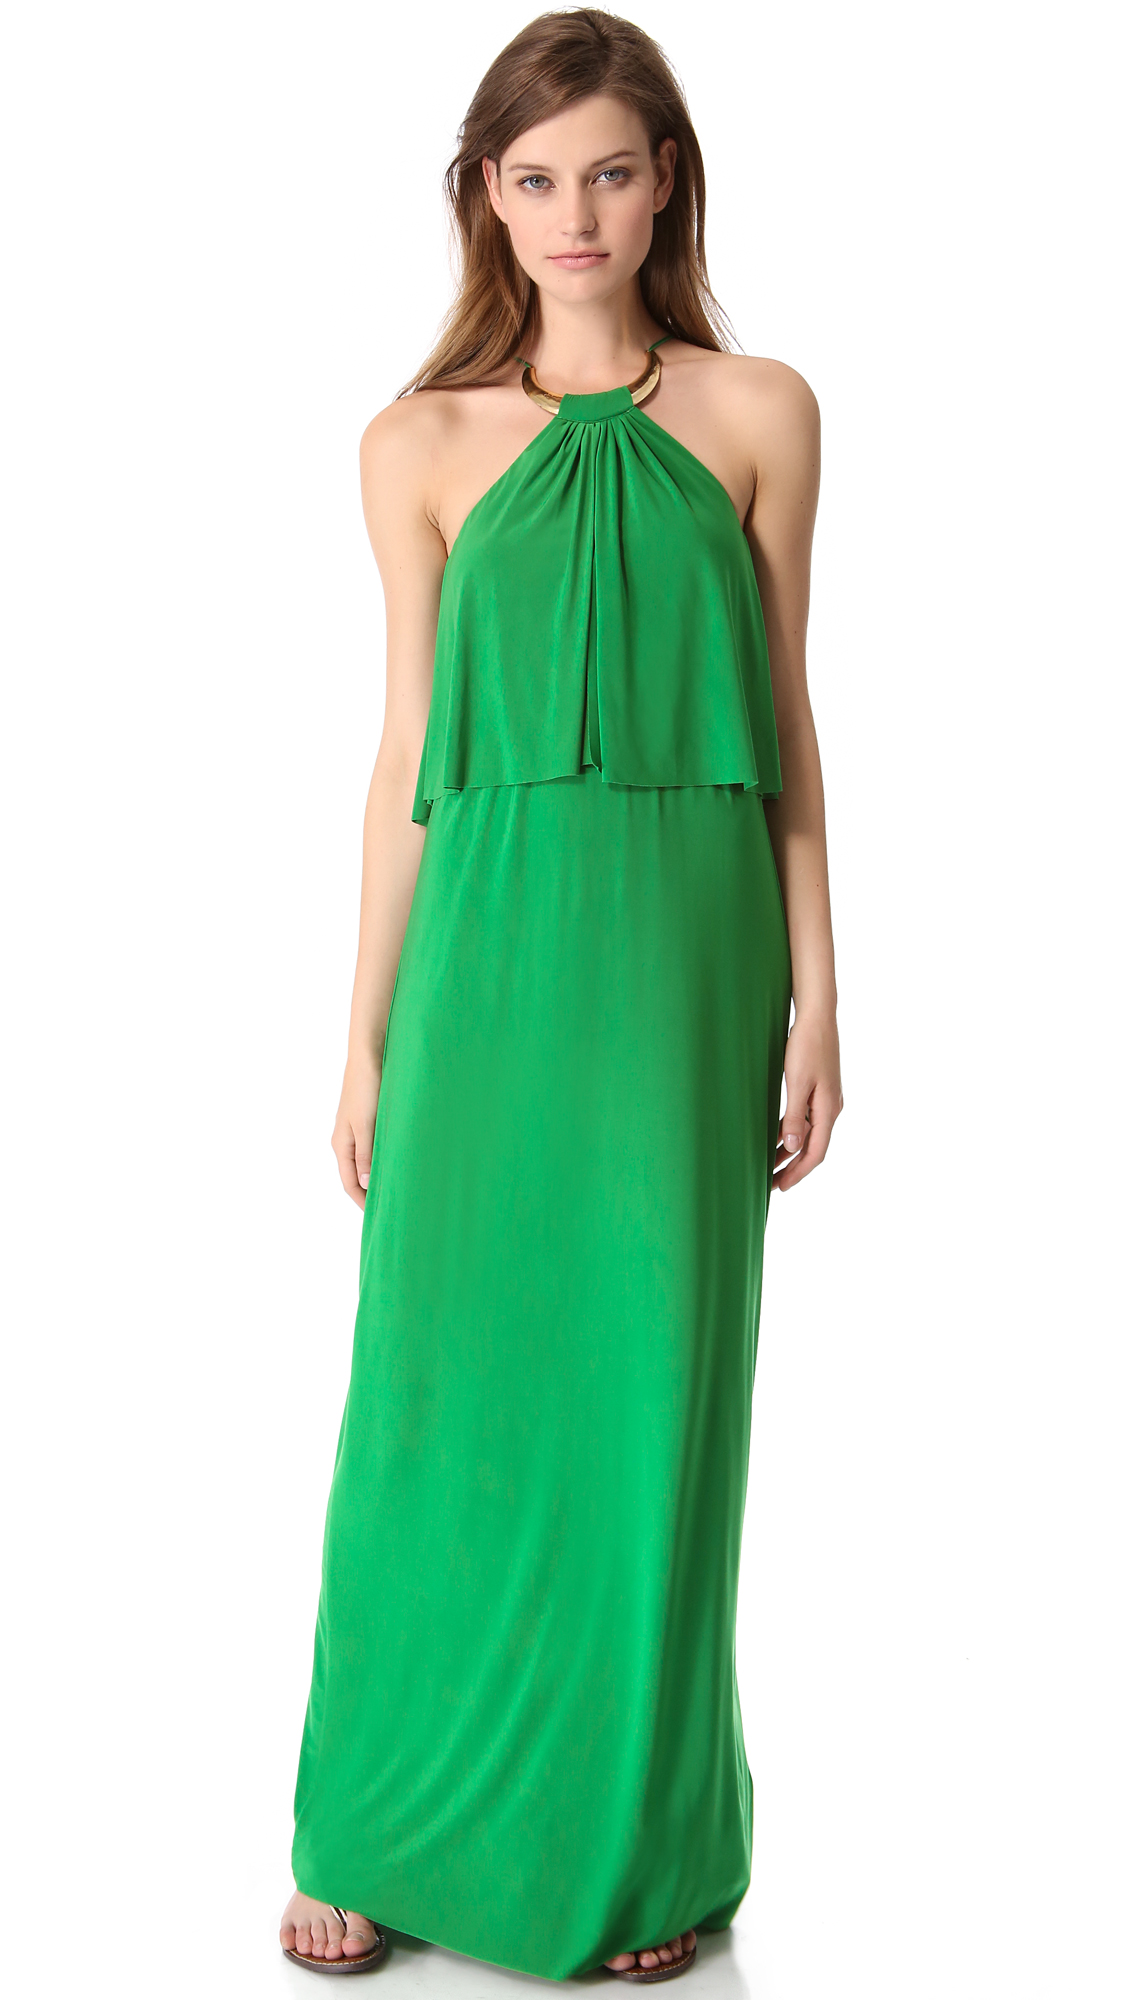 Lyst - T-Bags Halter Maxi Dress in Green